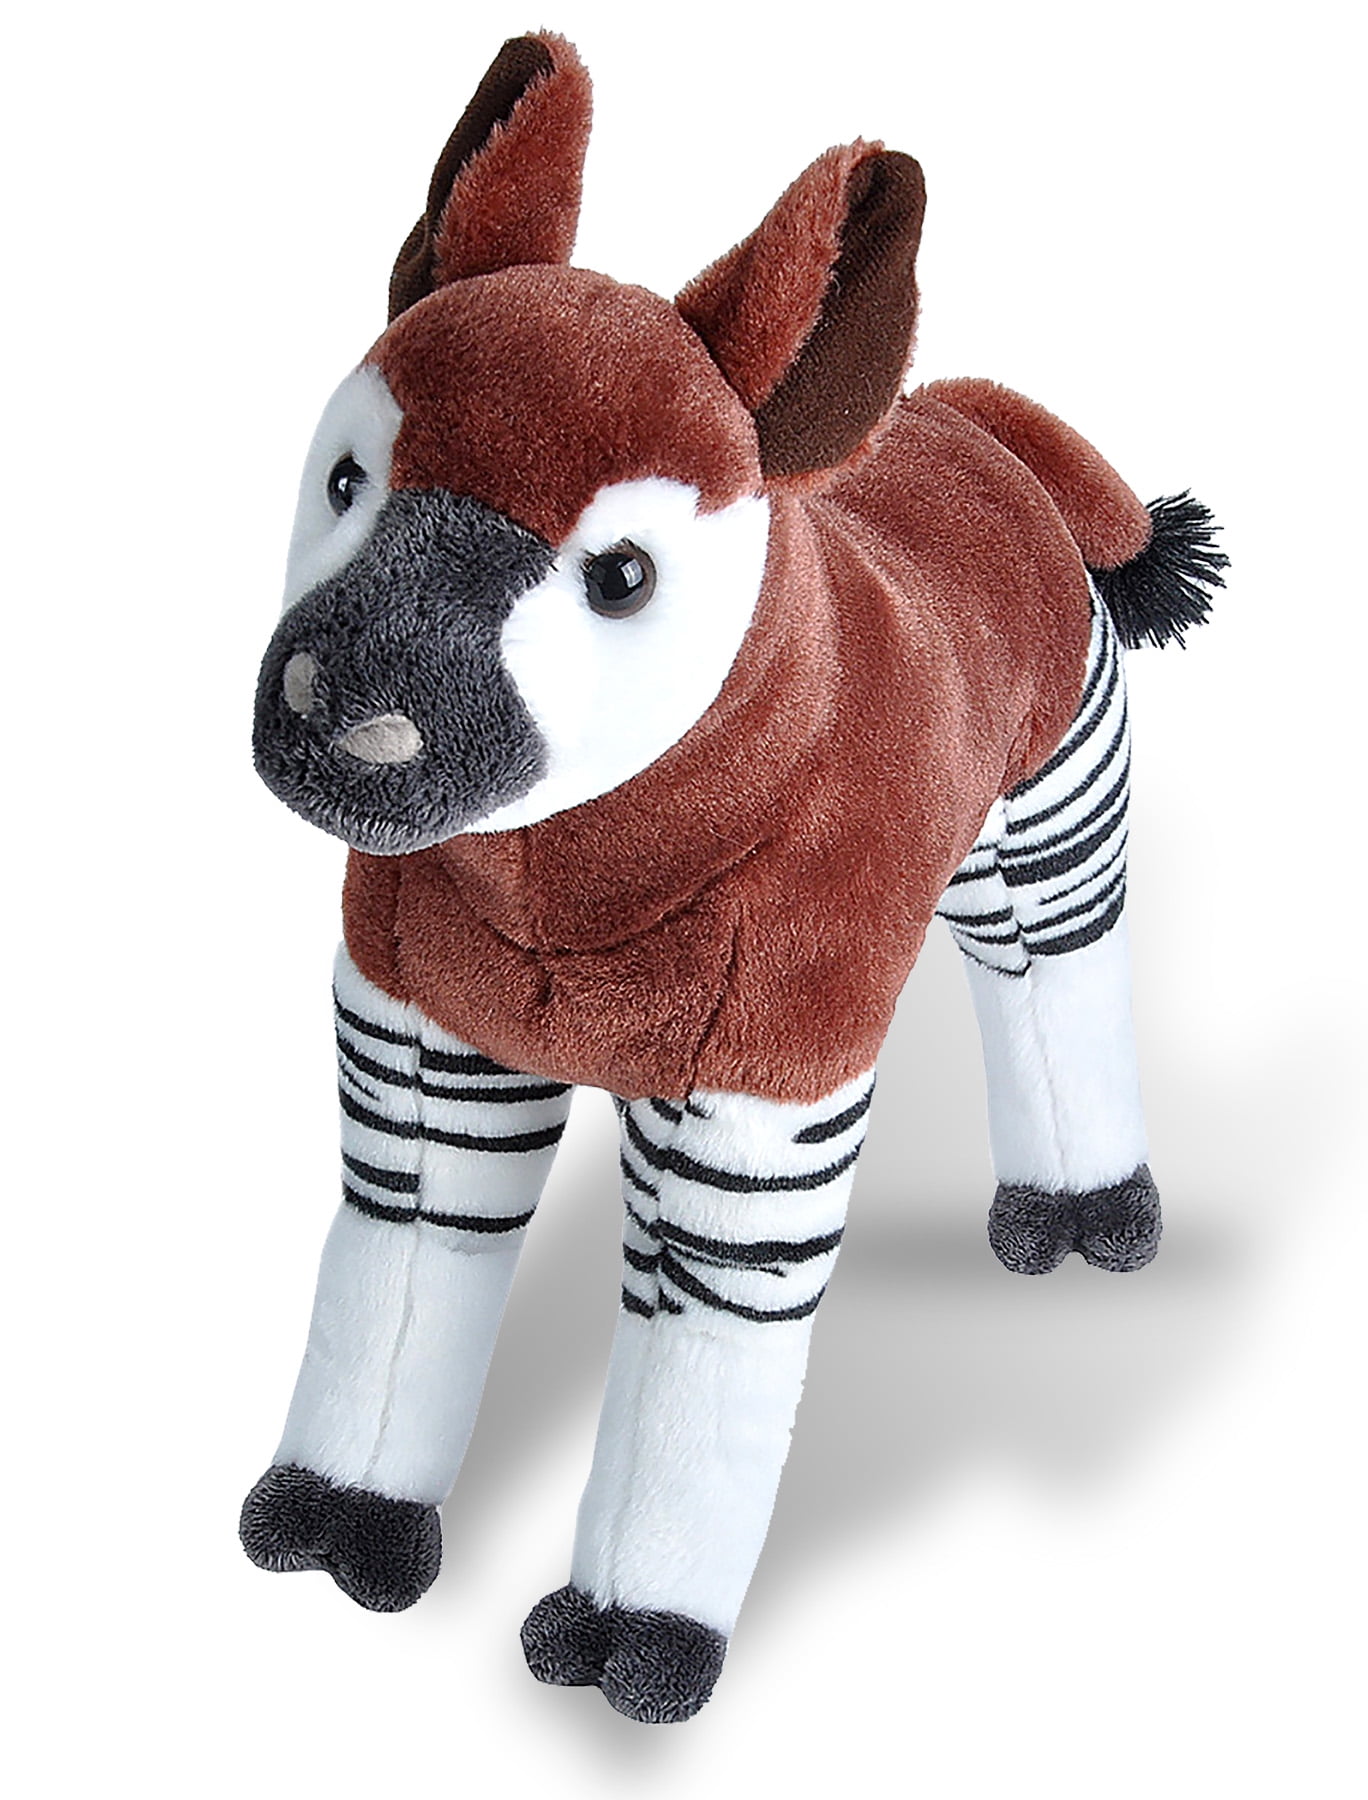 16" Okapi Plush Stuffed Animal Toy by Fiesta Toys Free Shipping 